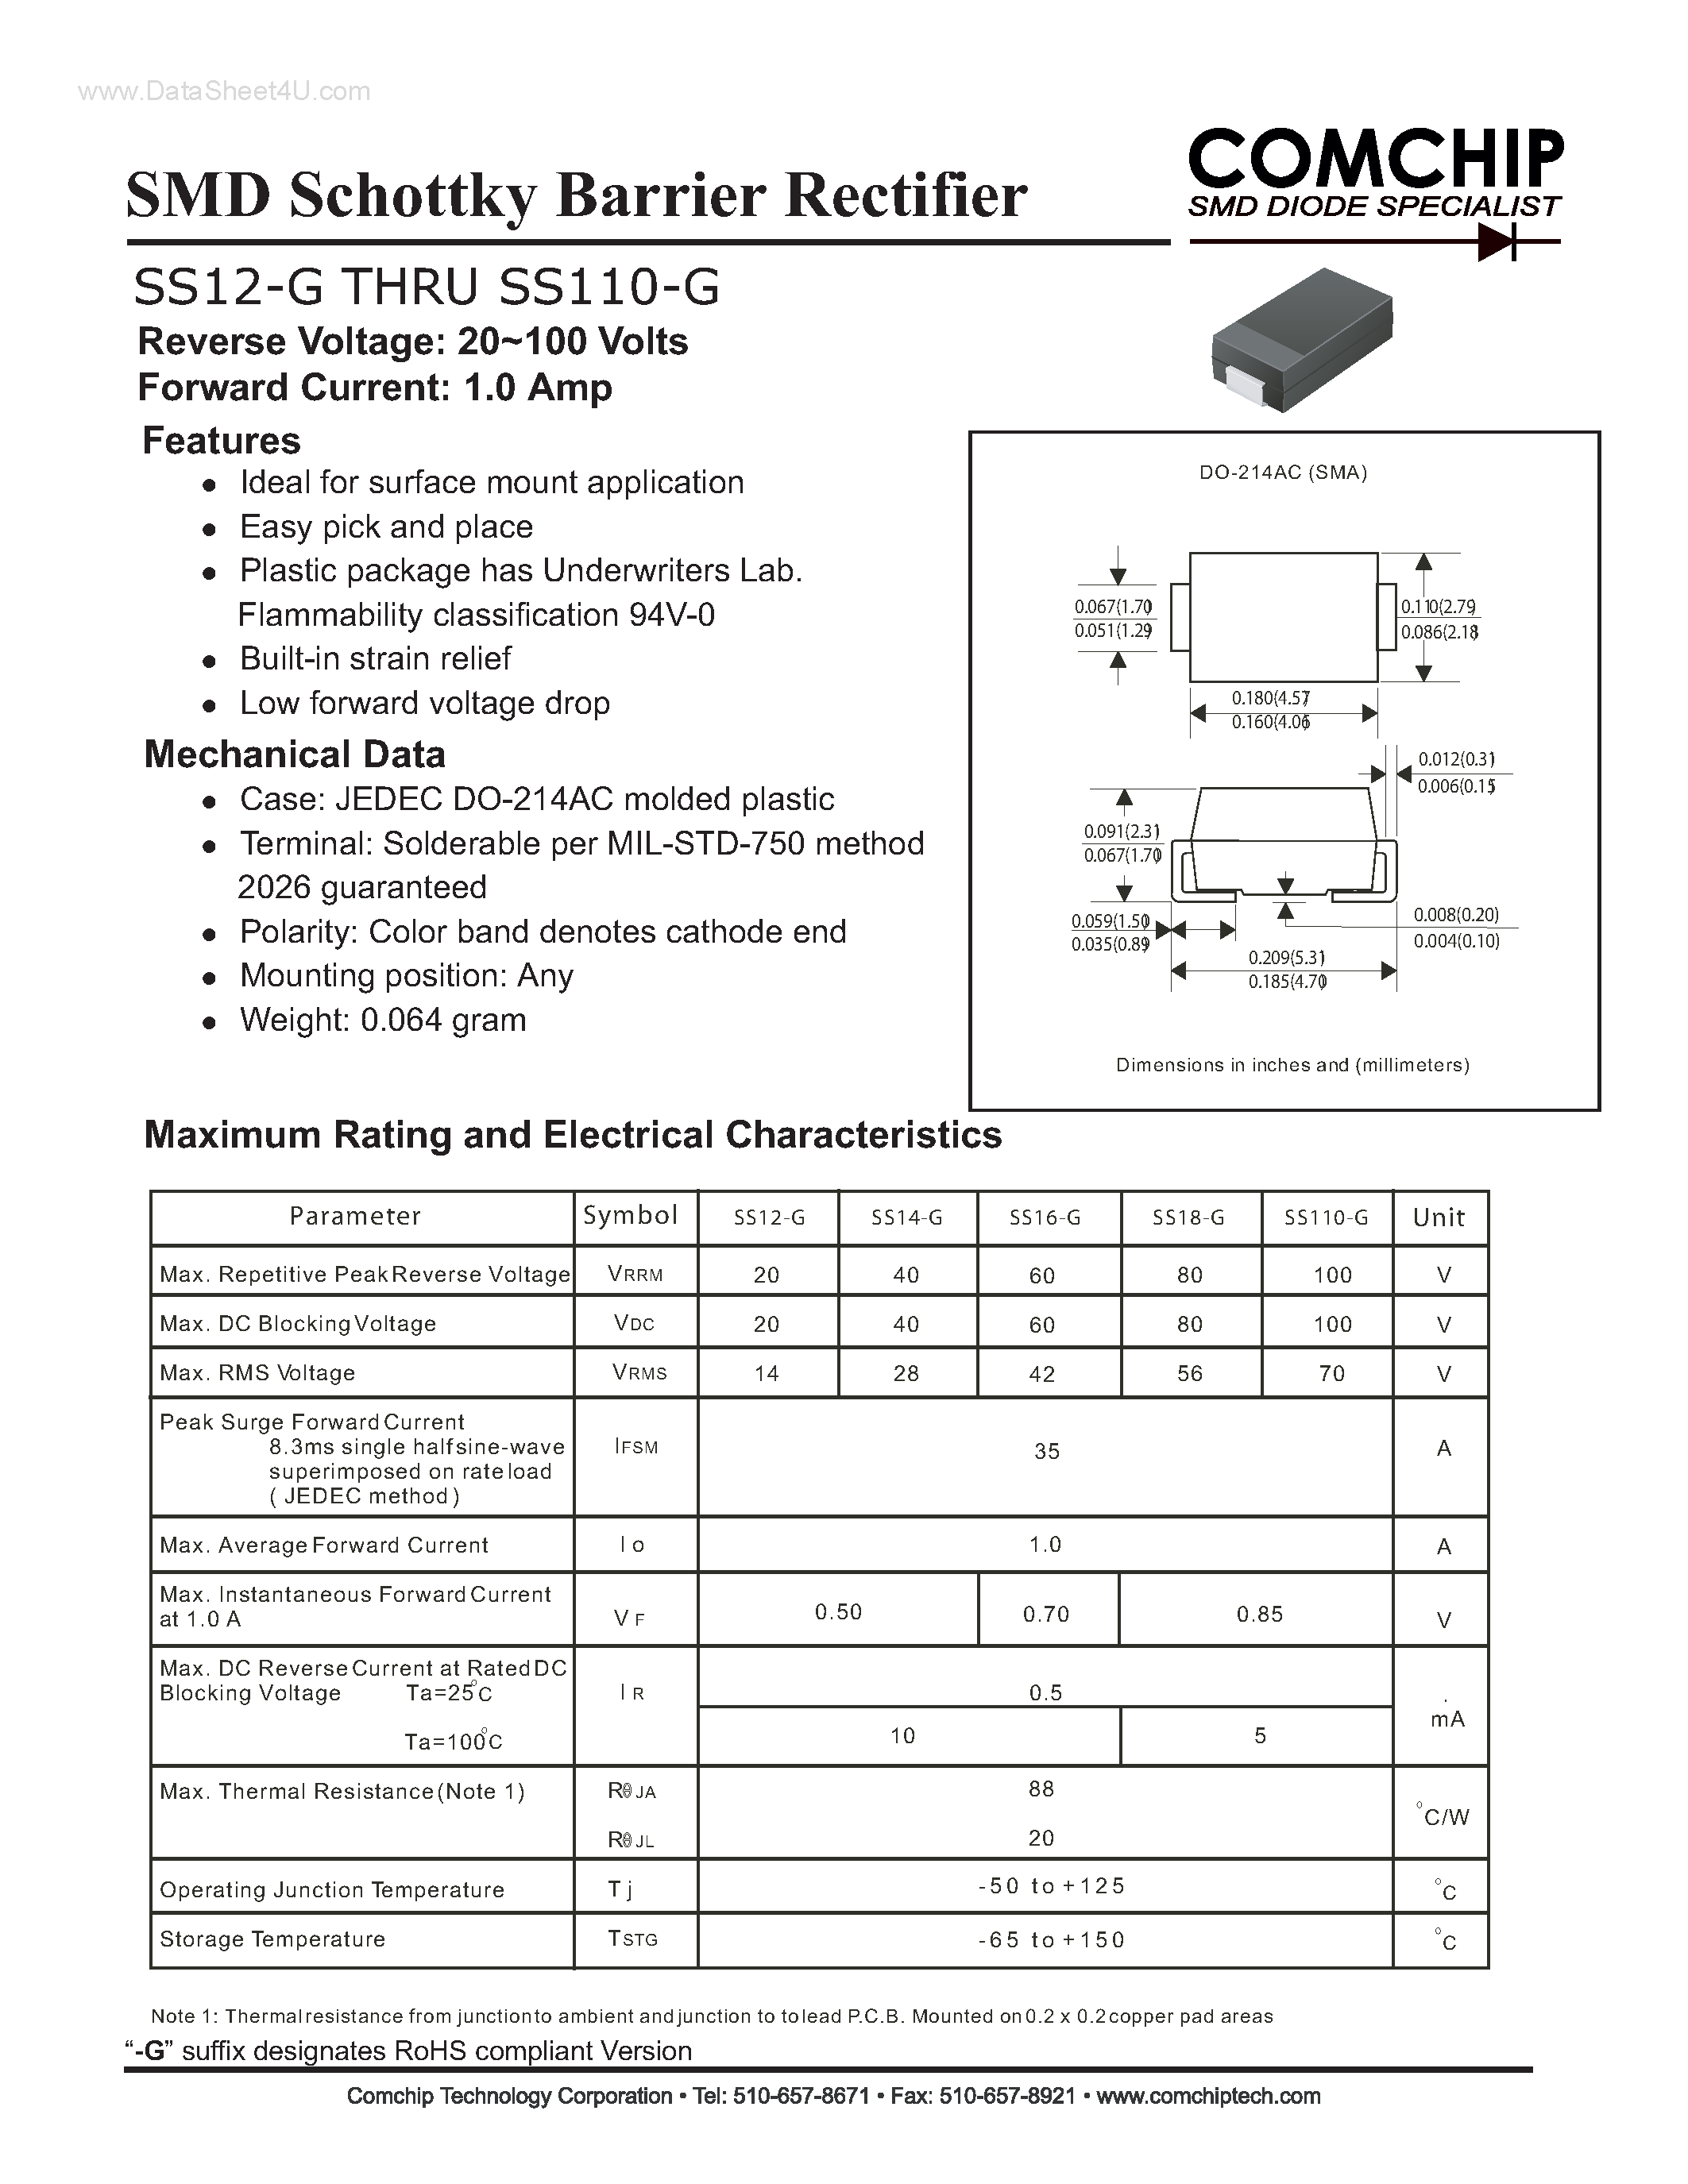 Datasheet SS110-G - (SS12-G - SS110-G) SMD Schottky Barrier Rectifier page 1